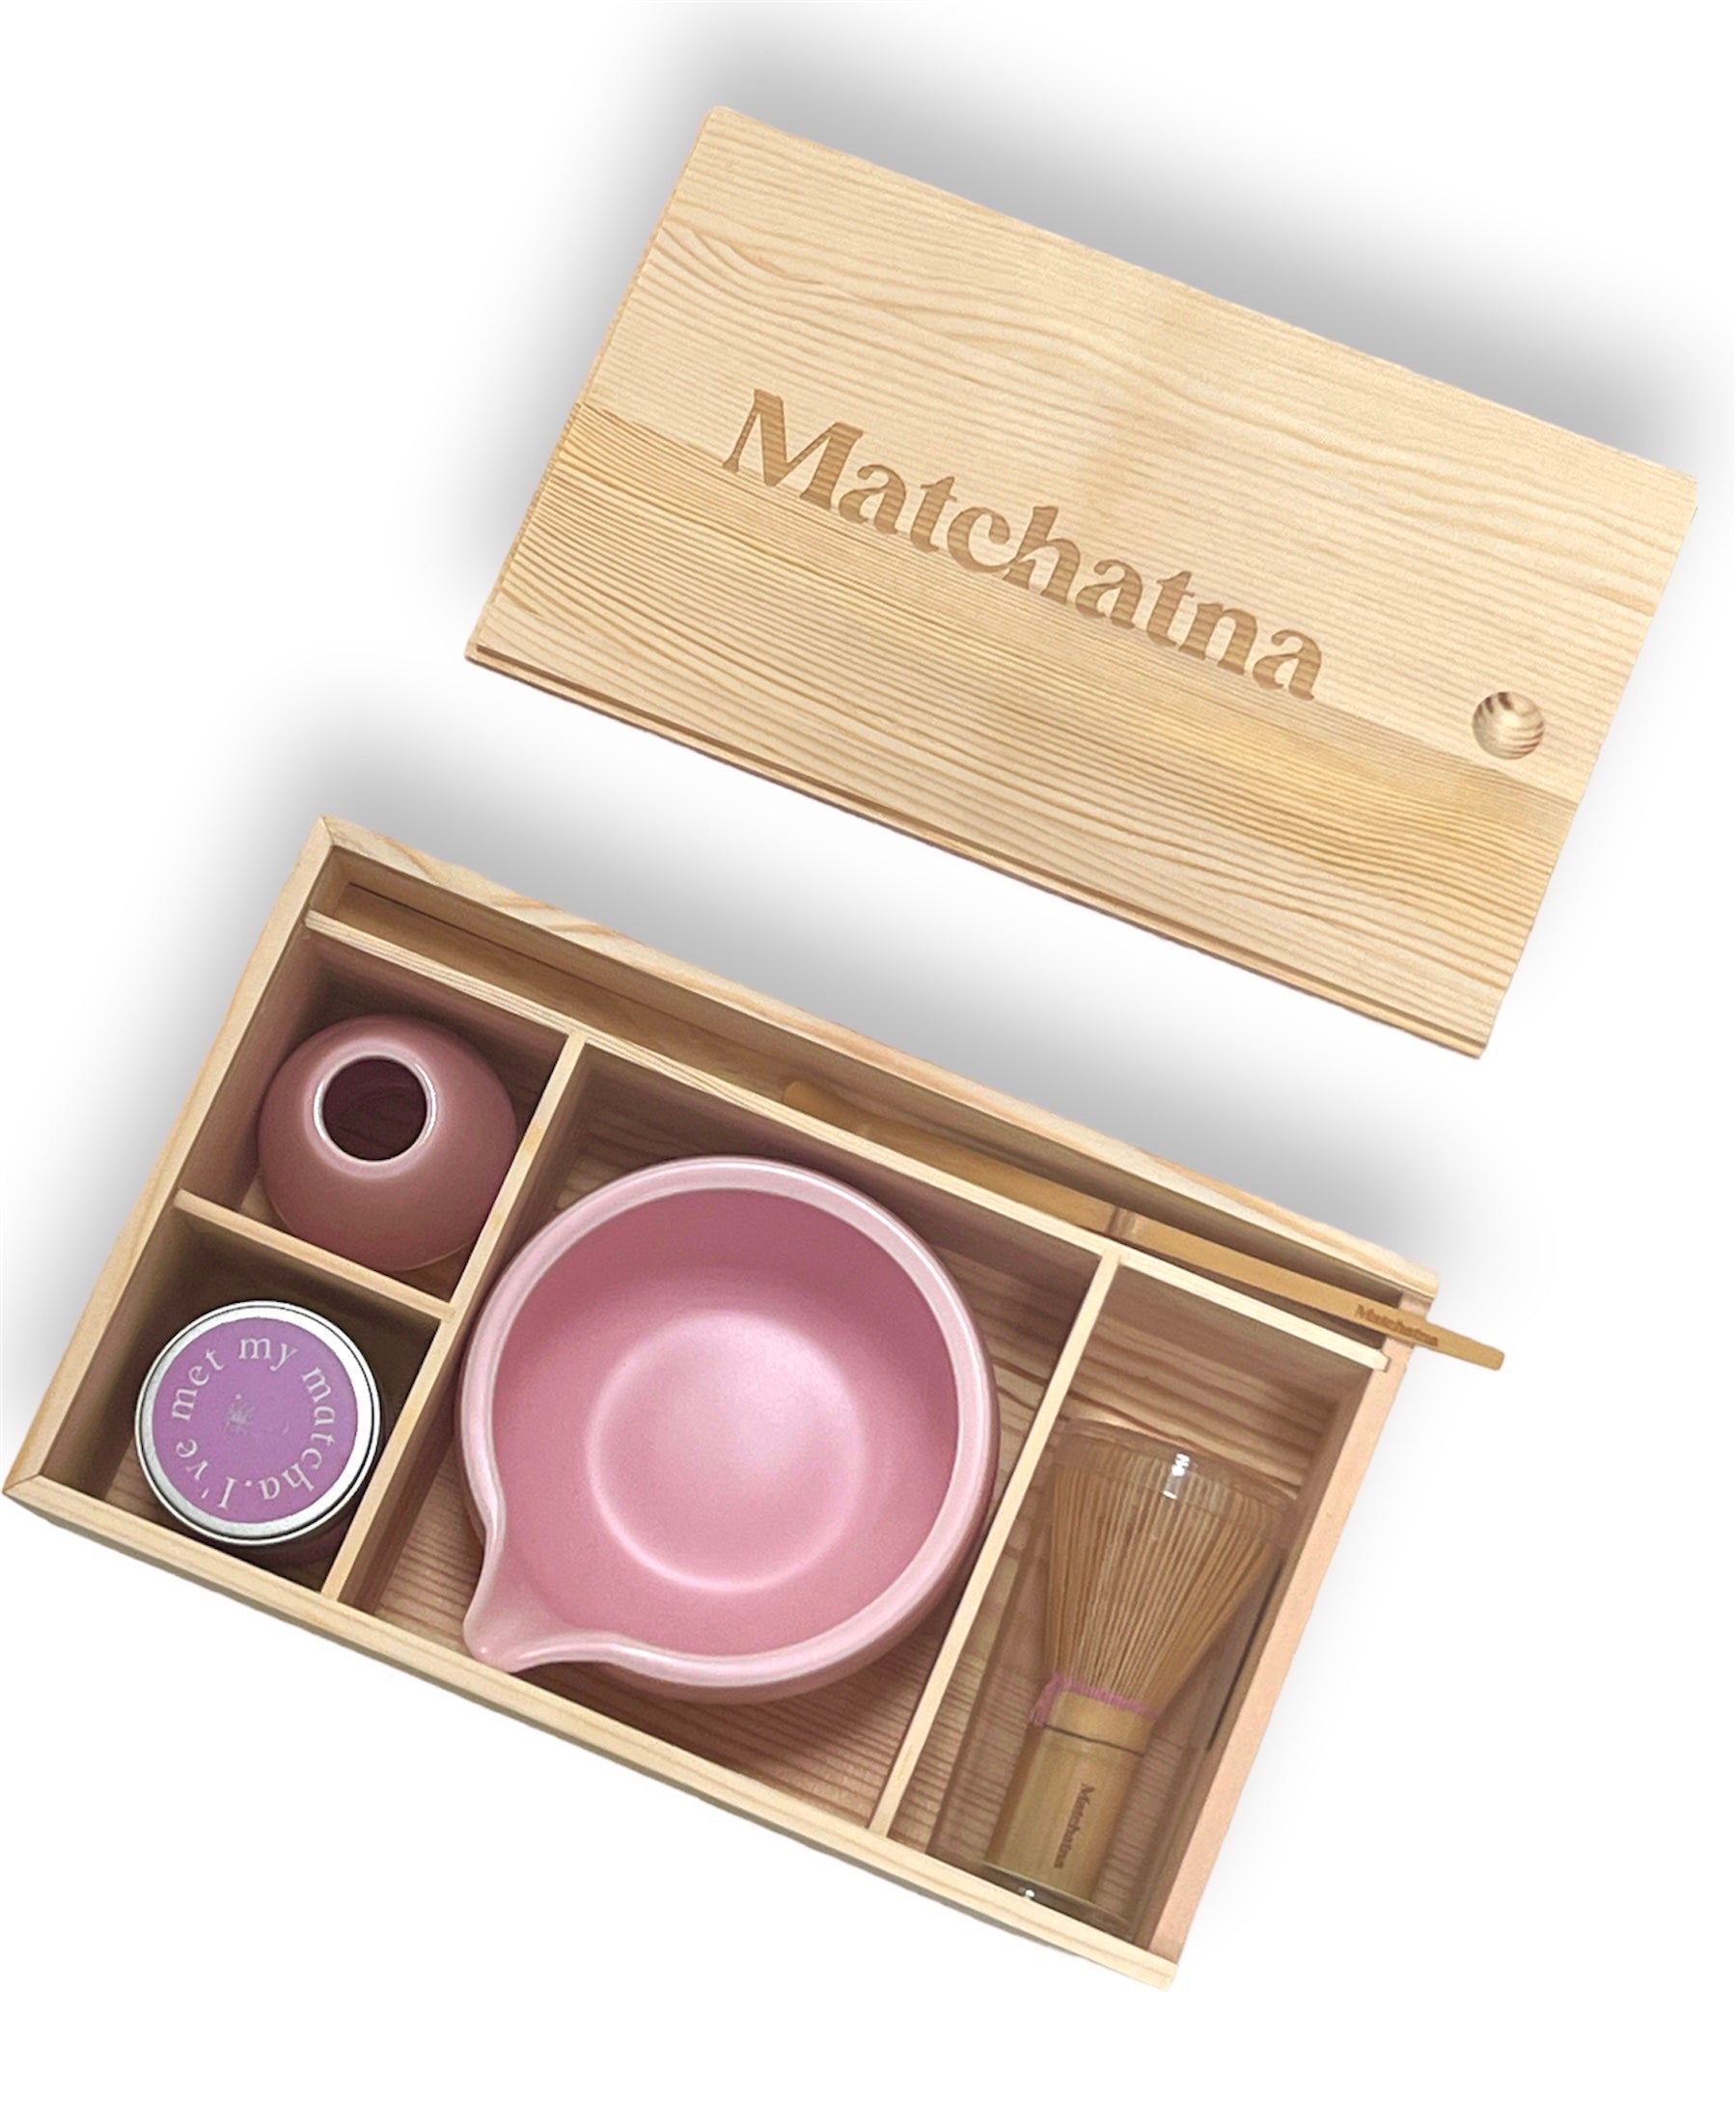 Matchatna pink set – matchatna